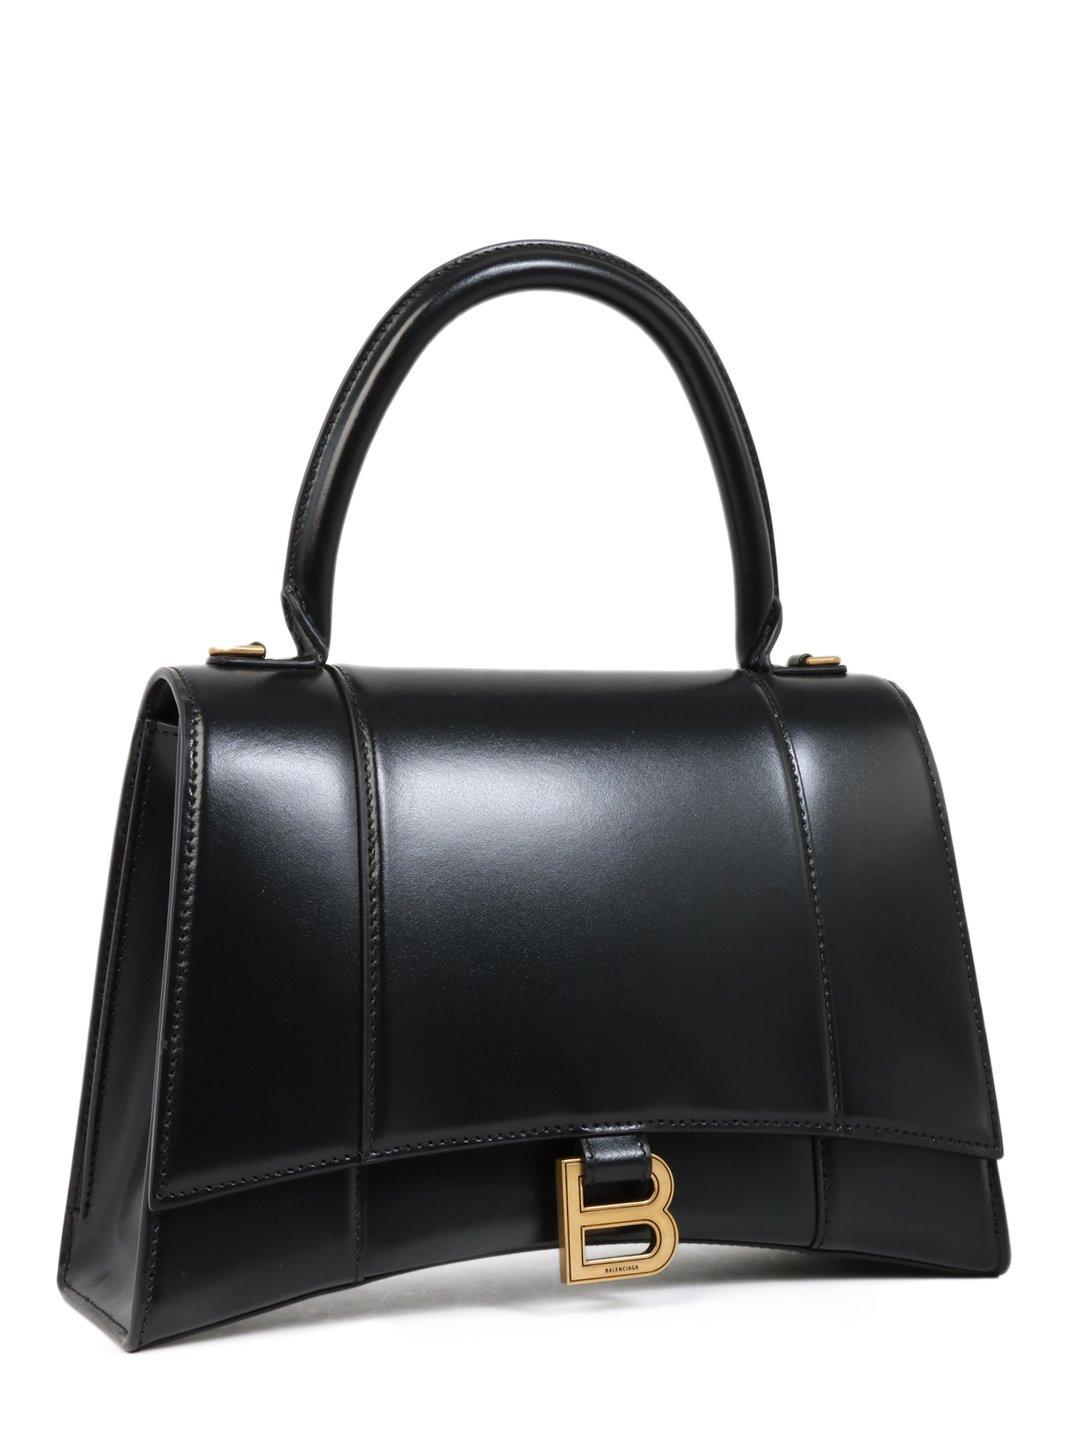 Balenciaga Leather Hourglass Medium Top Handle Bag in Black - Lyst